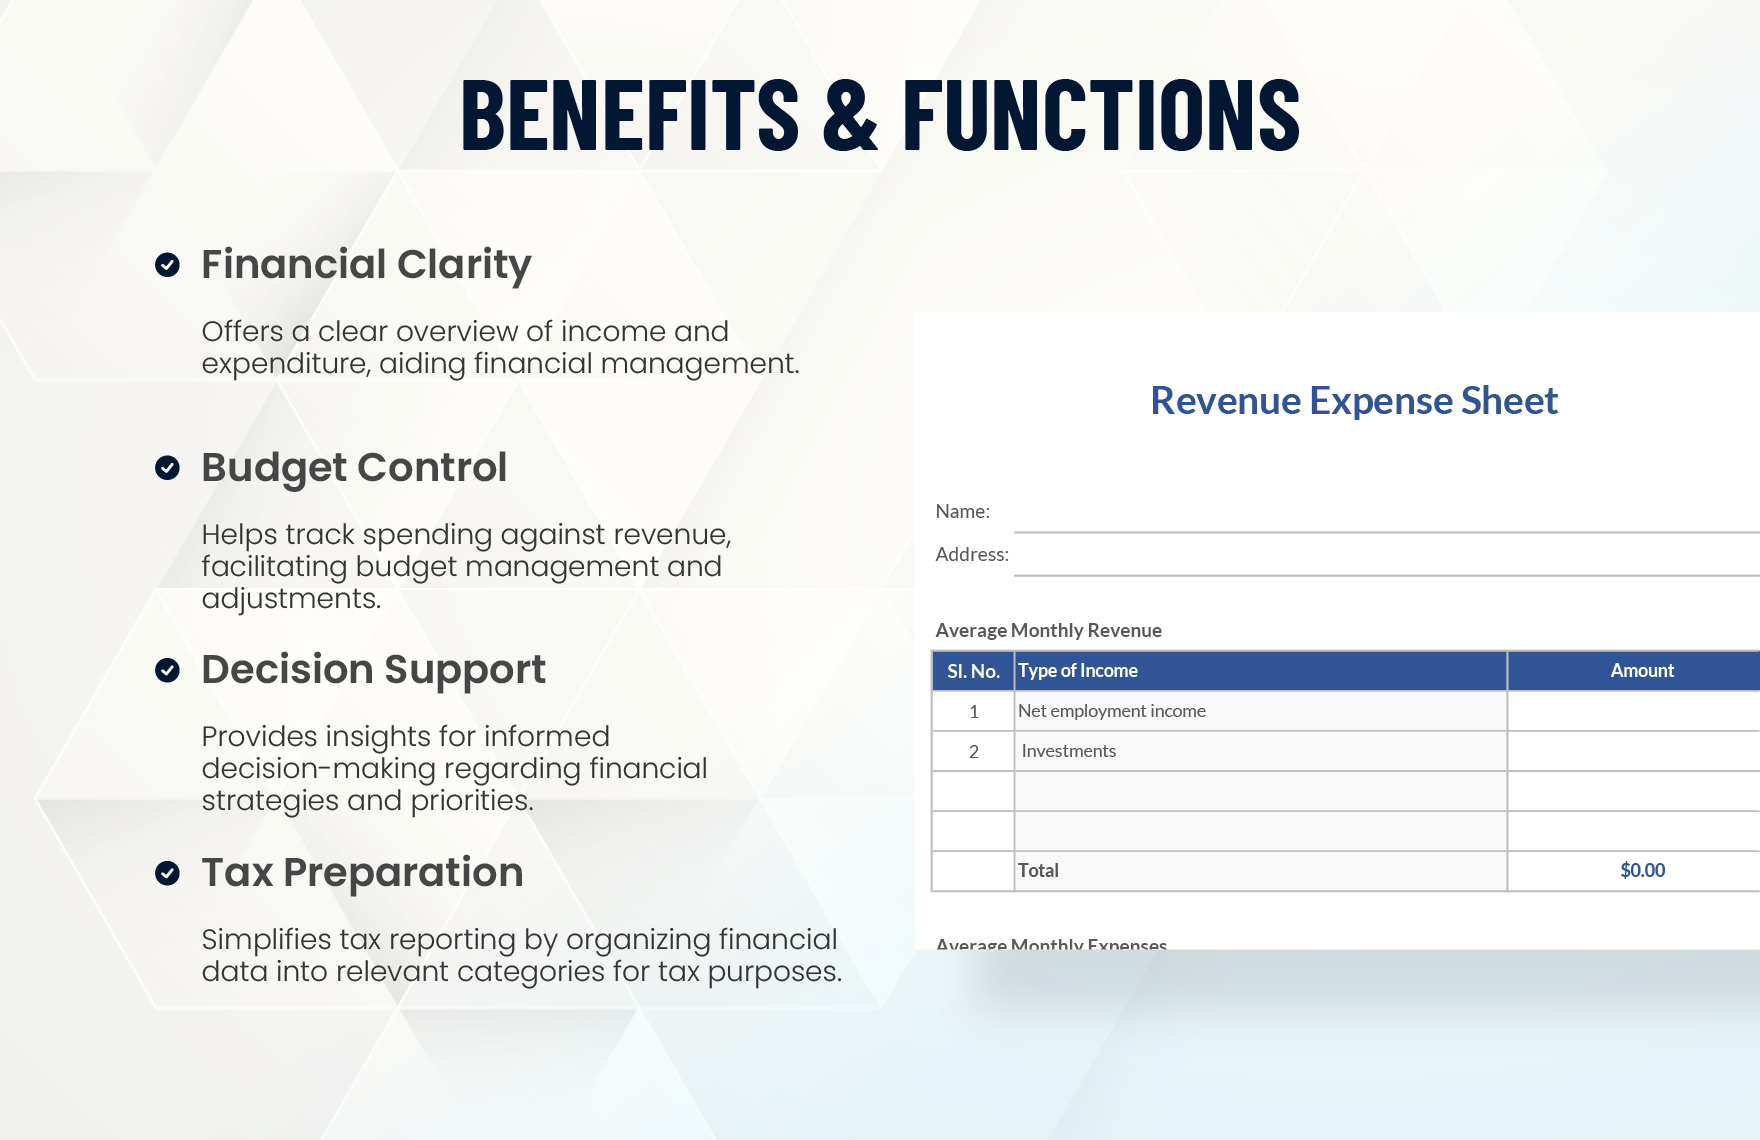 Revenue Expense Sheet Template